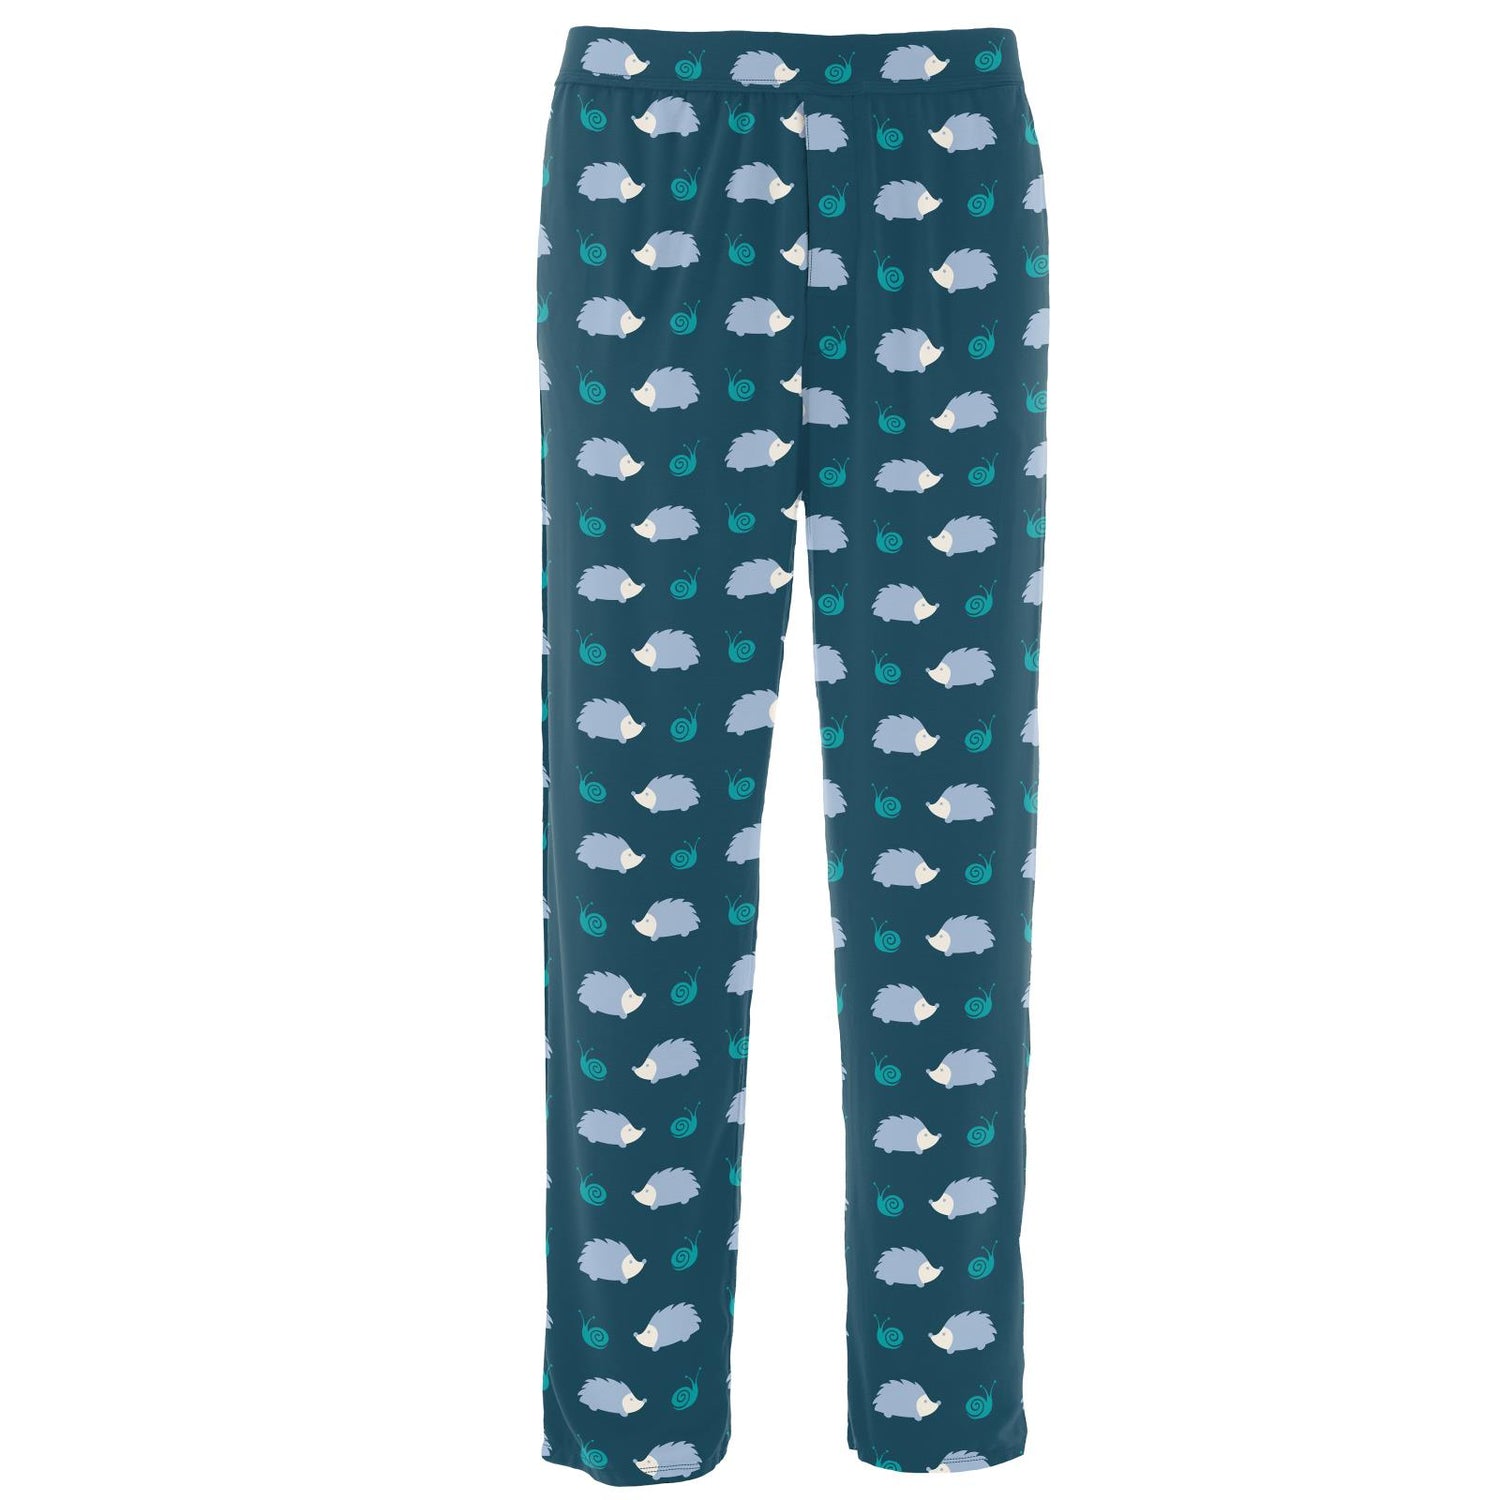 Men's Print Pajama Pants in Peacock Hedgehog